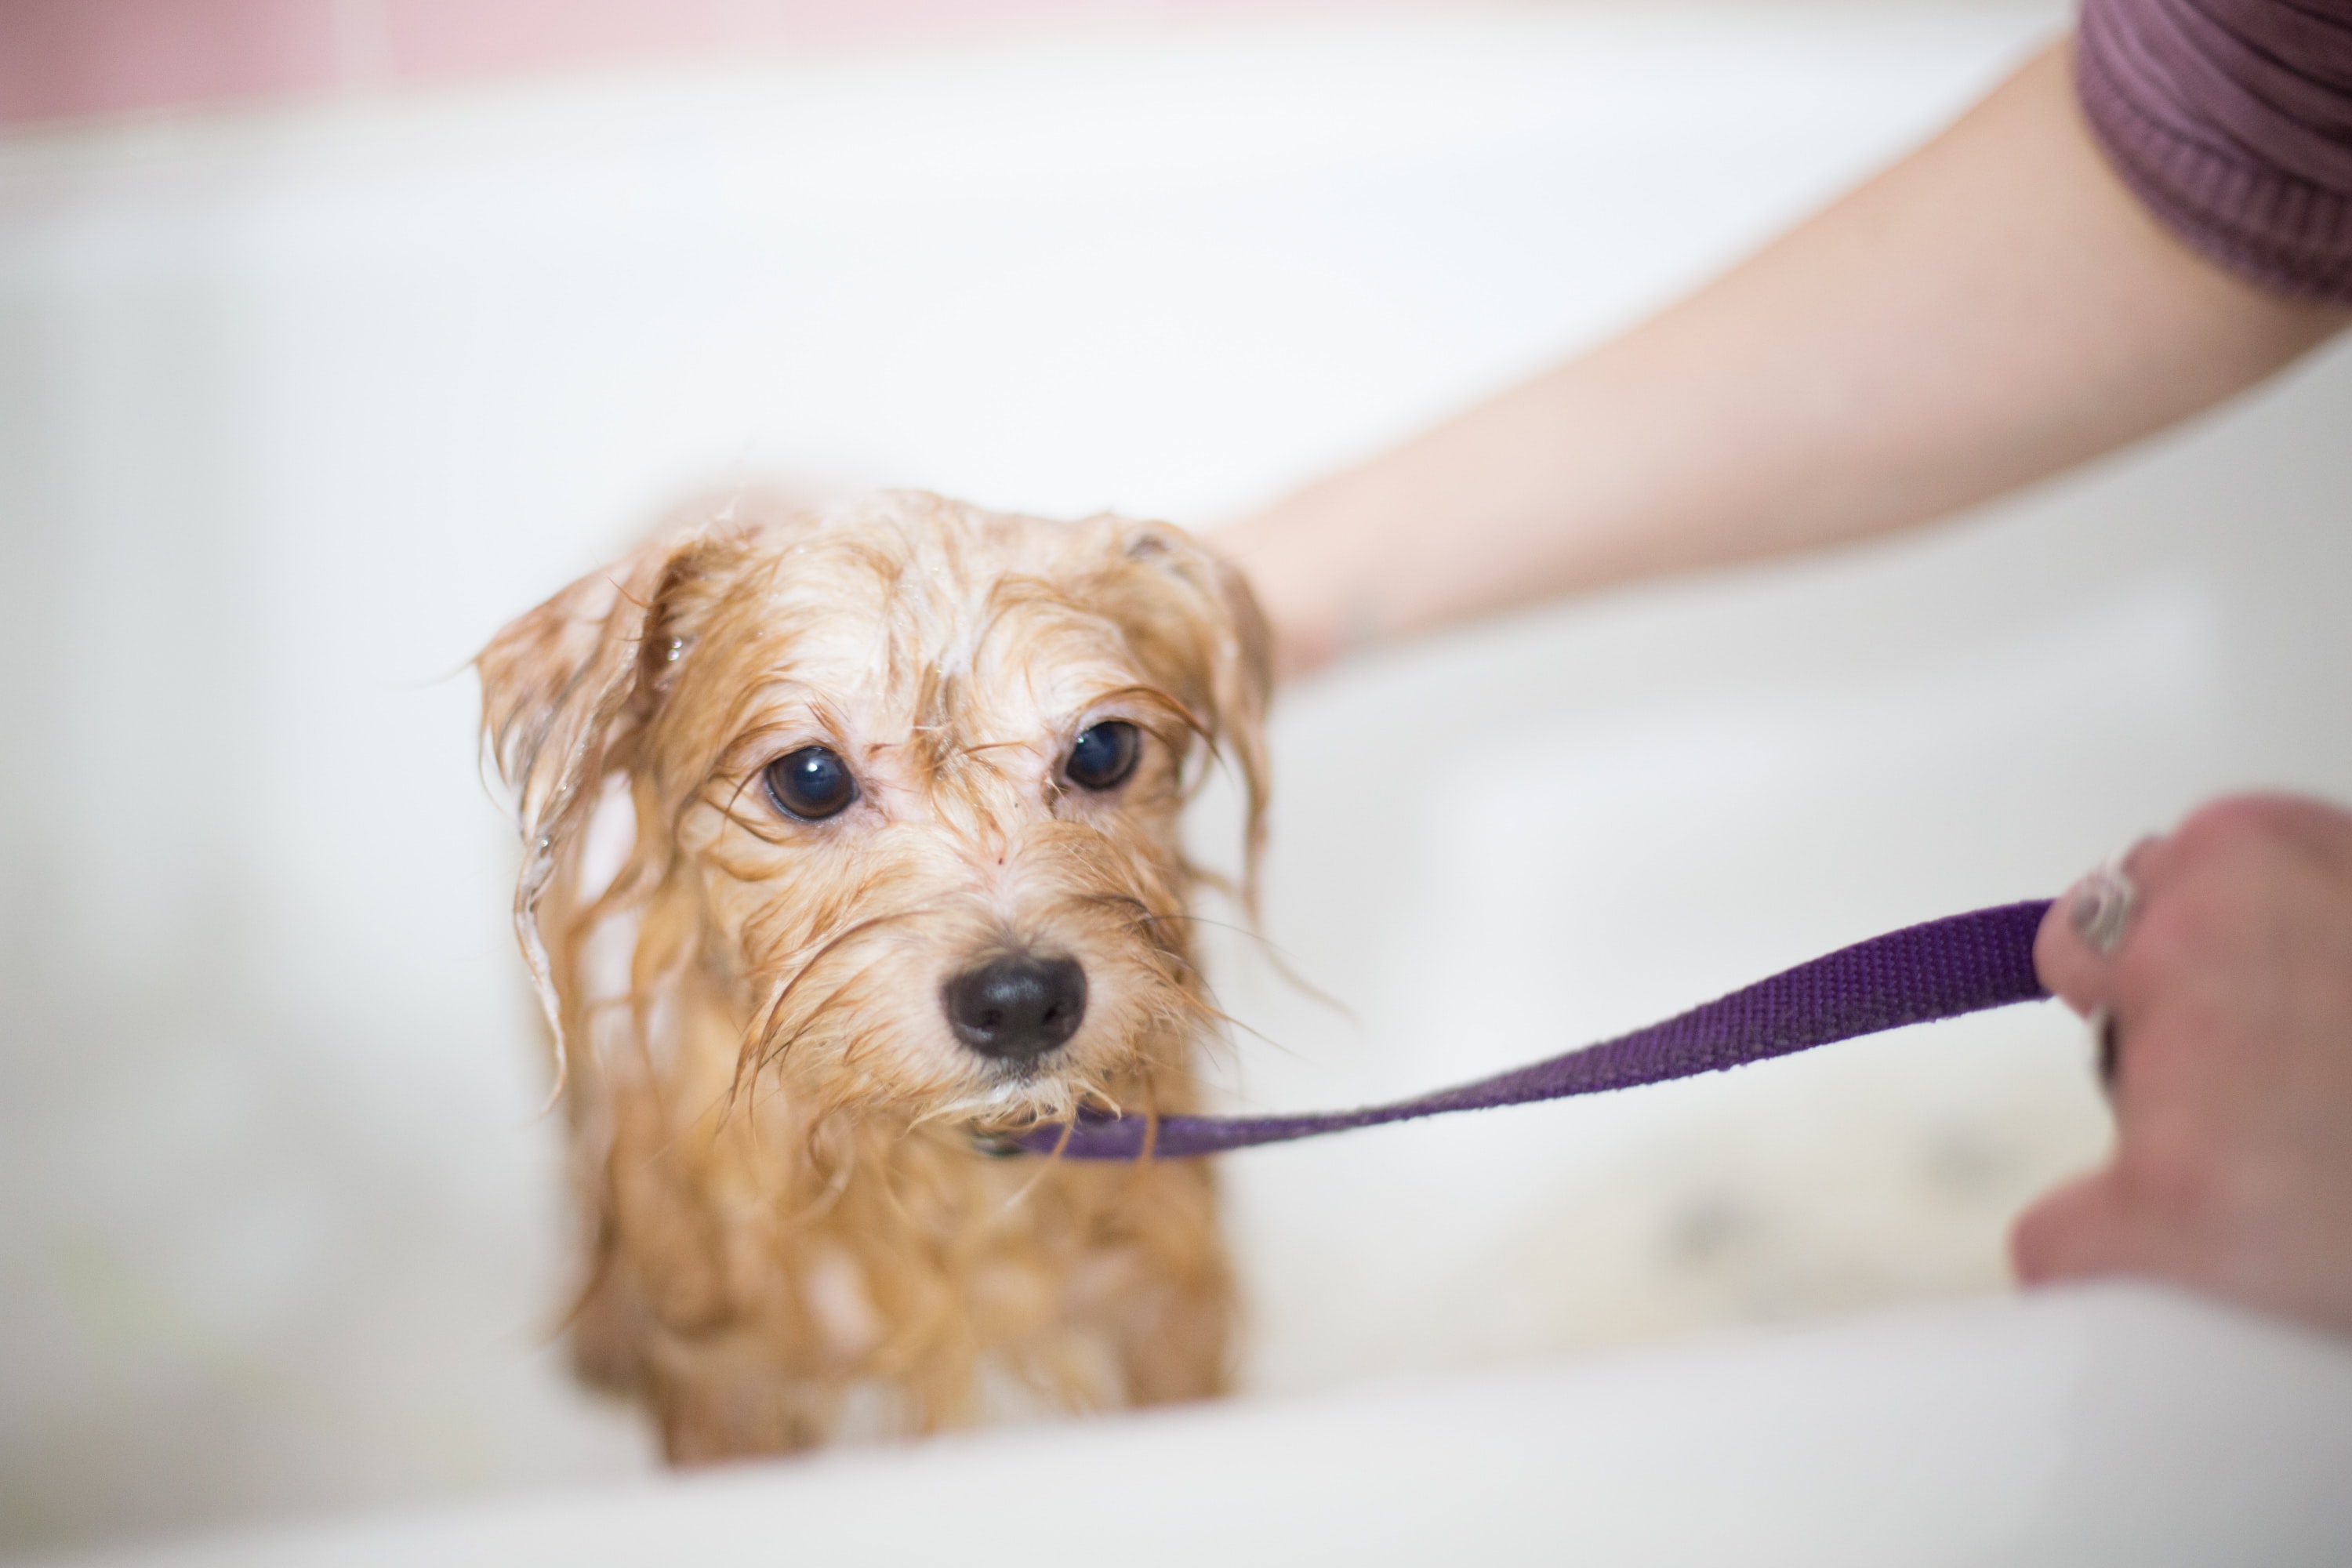 Can Humans Use Dog Shampoo